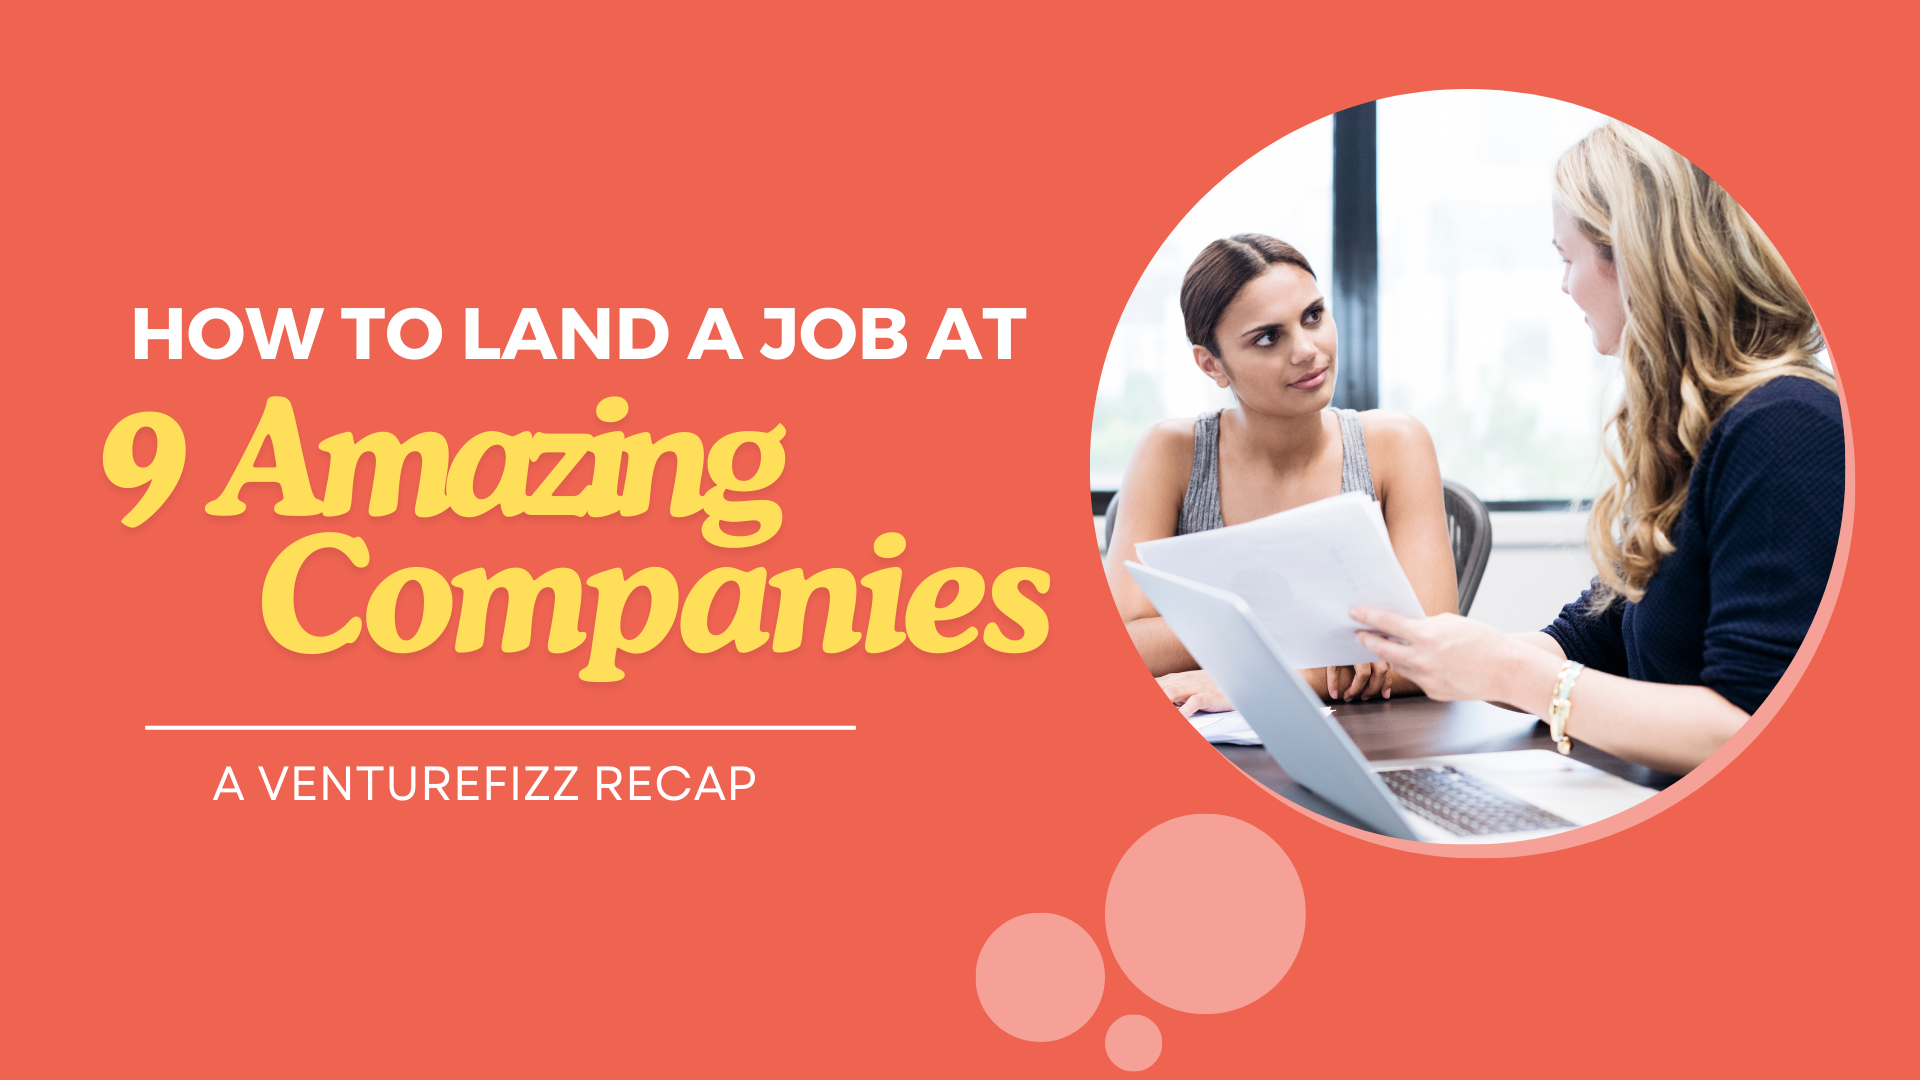 How to Land a Job at 9 Amazing Companies - A VentureFizz Recap banner image